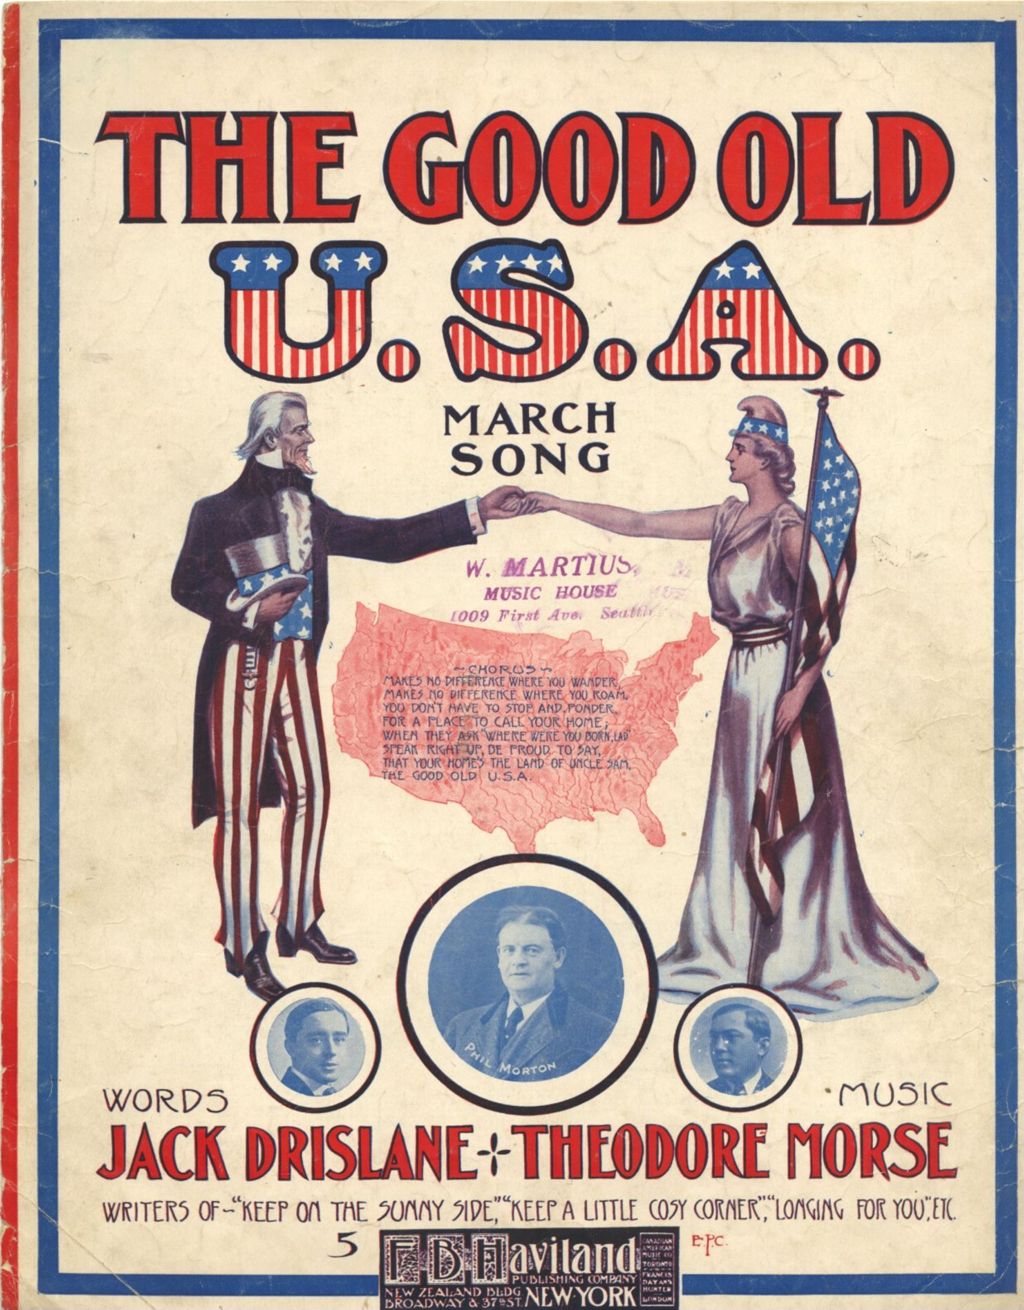 Miniature of Good Old U.S.A.